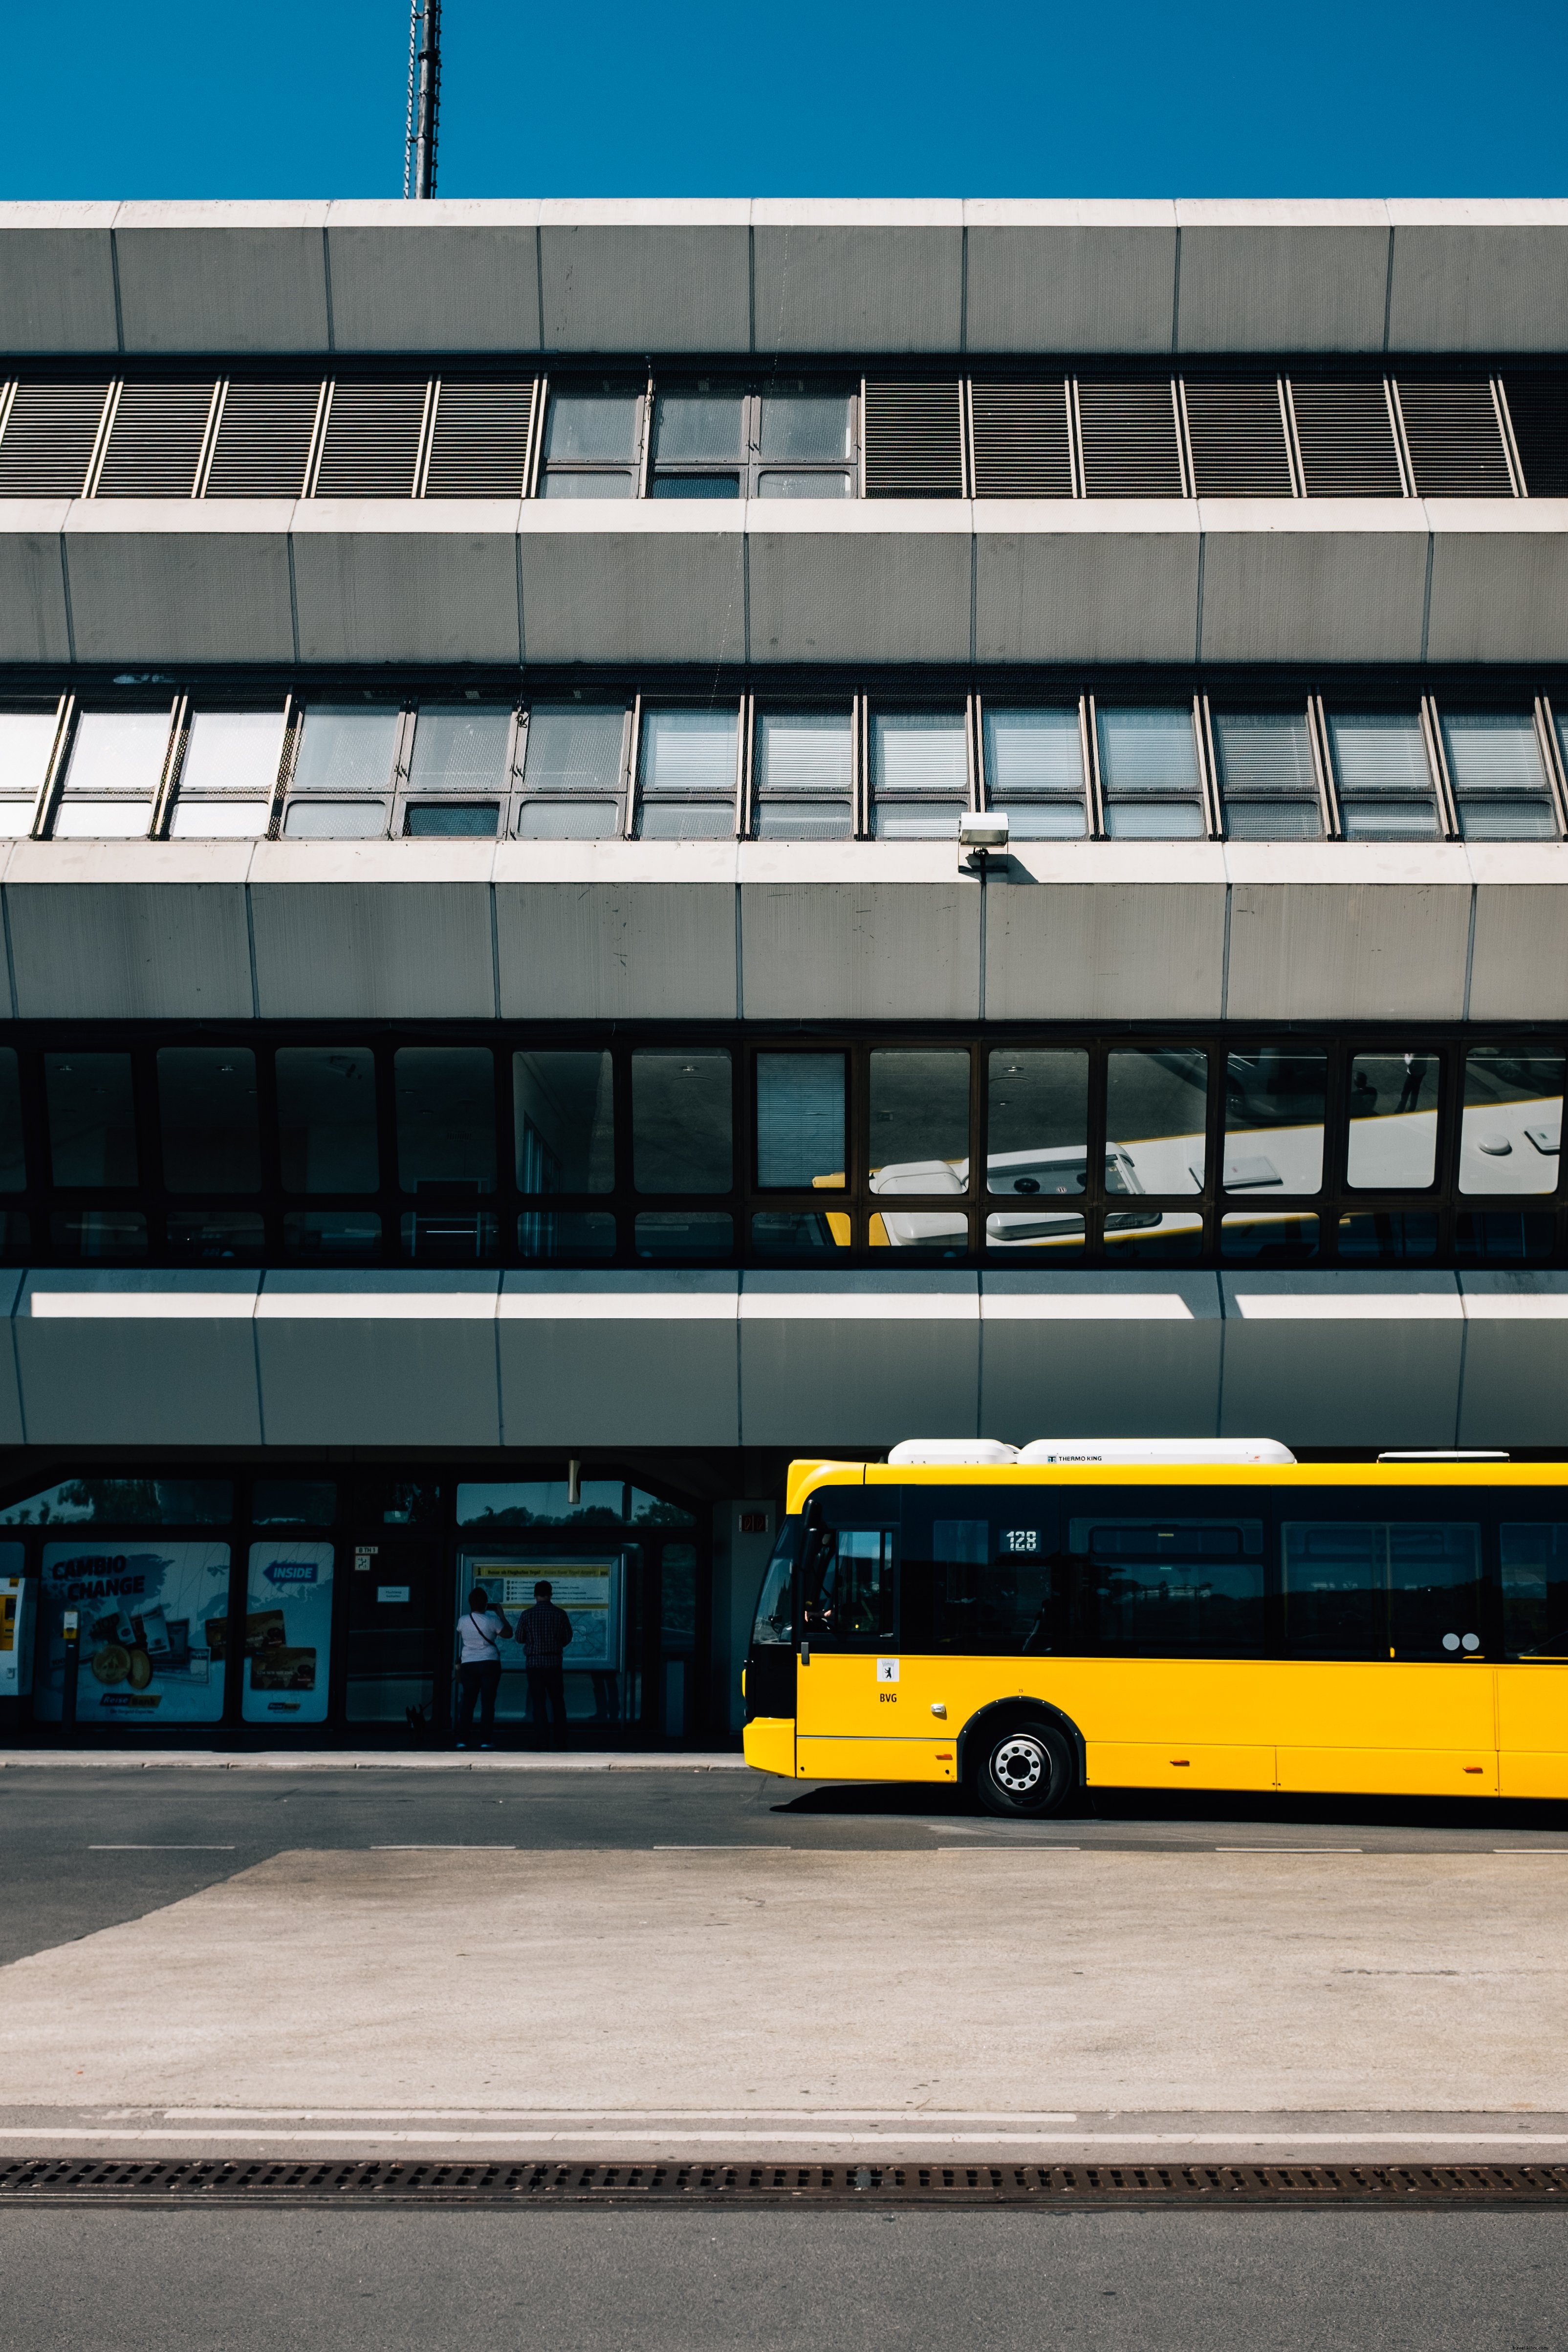 Foto de Parques de ônibus amarelos na cidade grande